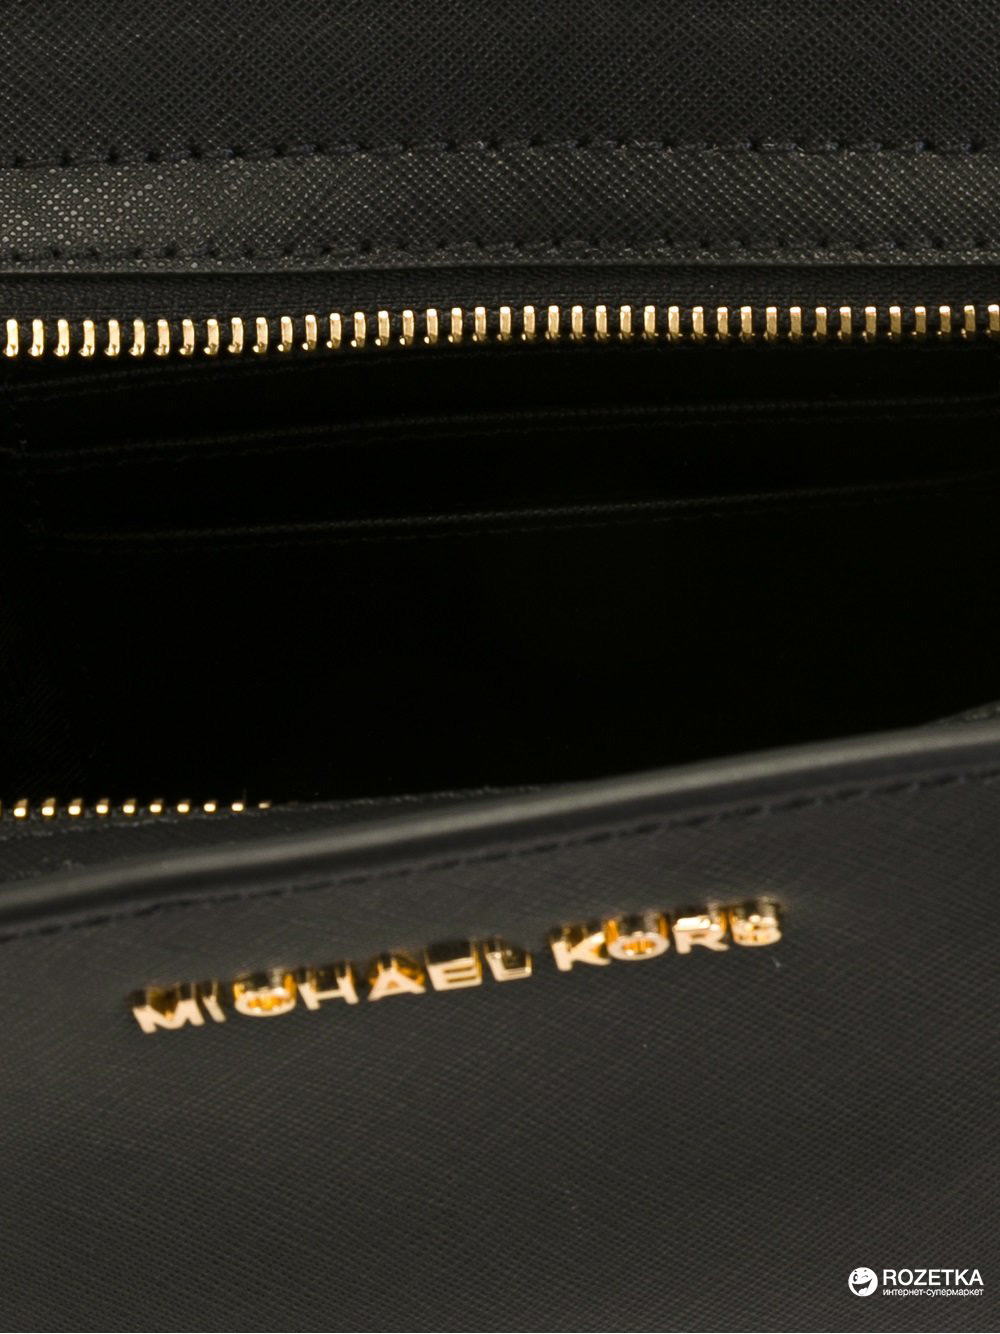 Cross body bags Michael Kors - Saffiano Selma mini bag - 32H3GLMC1L001